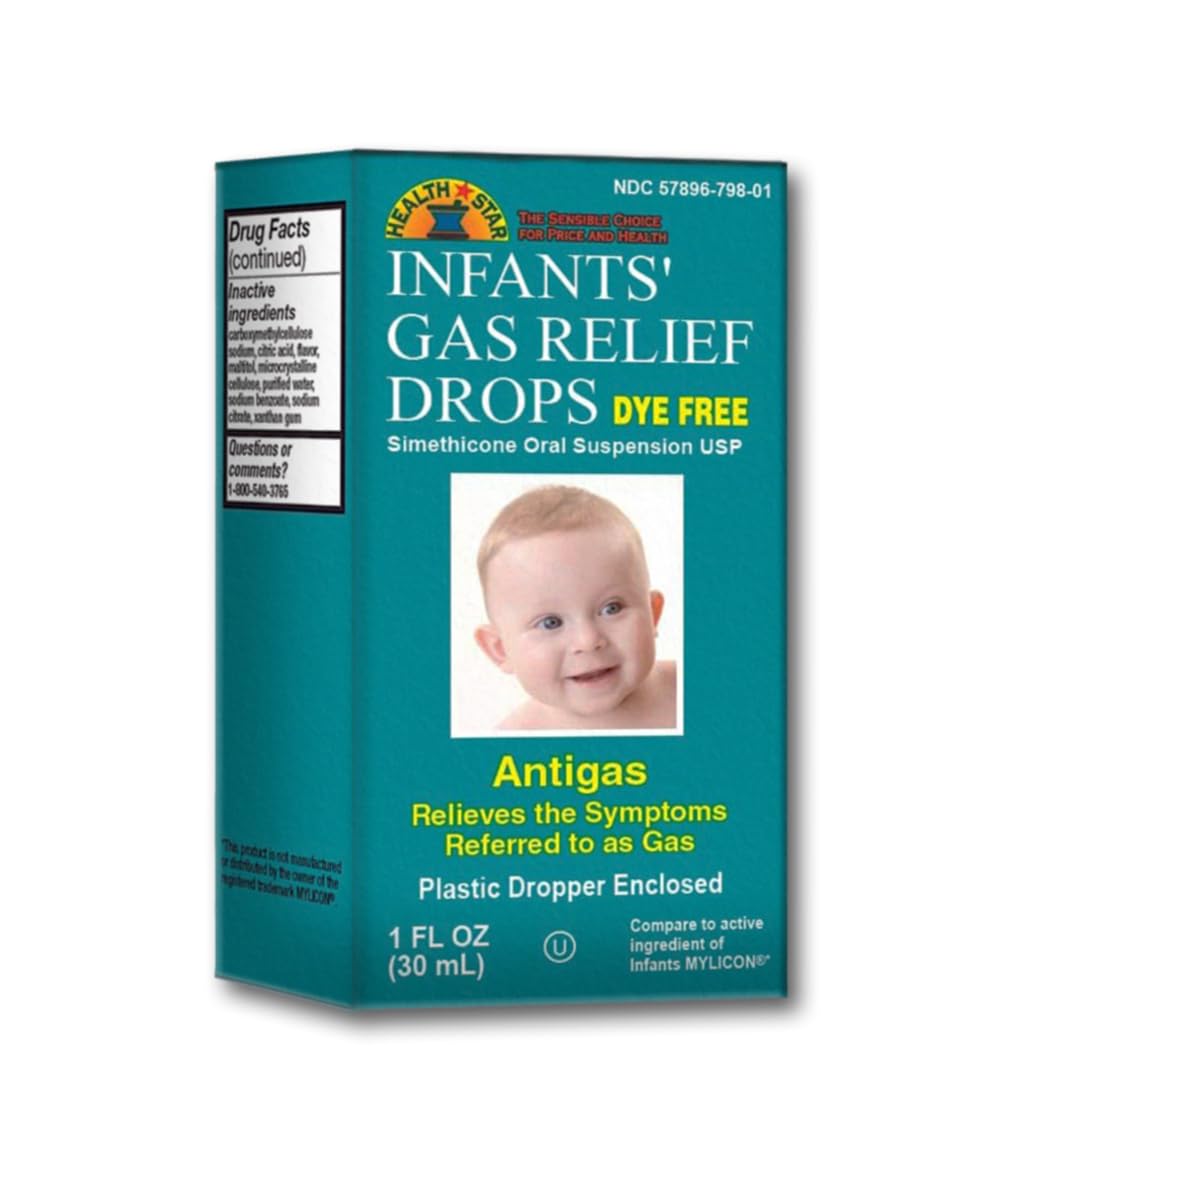 Infants’ Gas Relief Drops